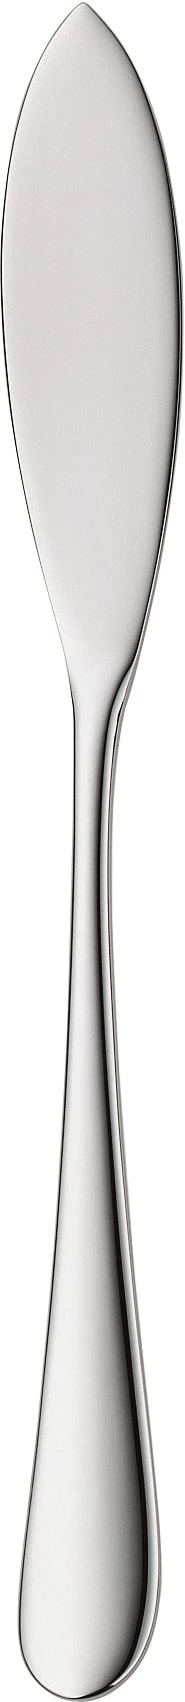 WMF Signum fiskekniv, 23,9 cm